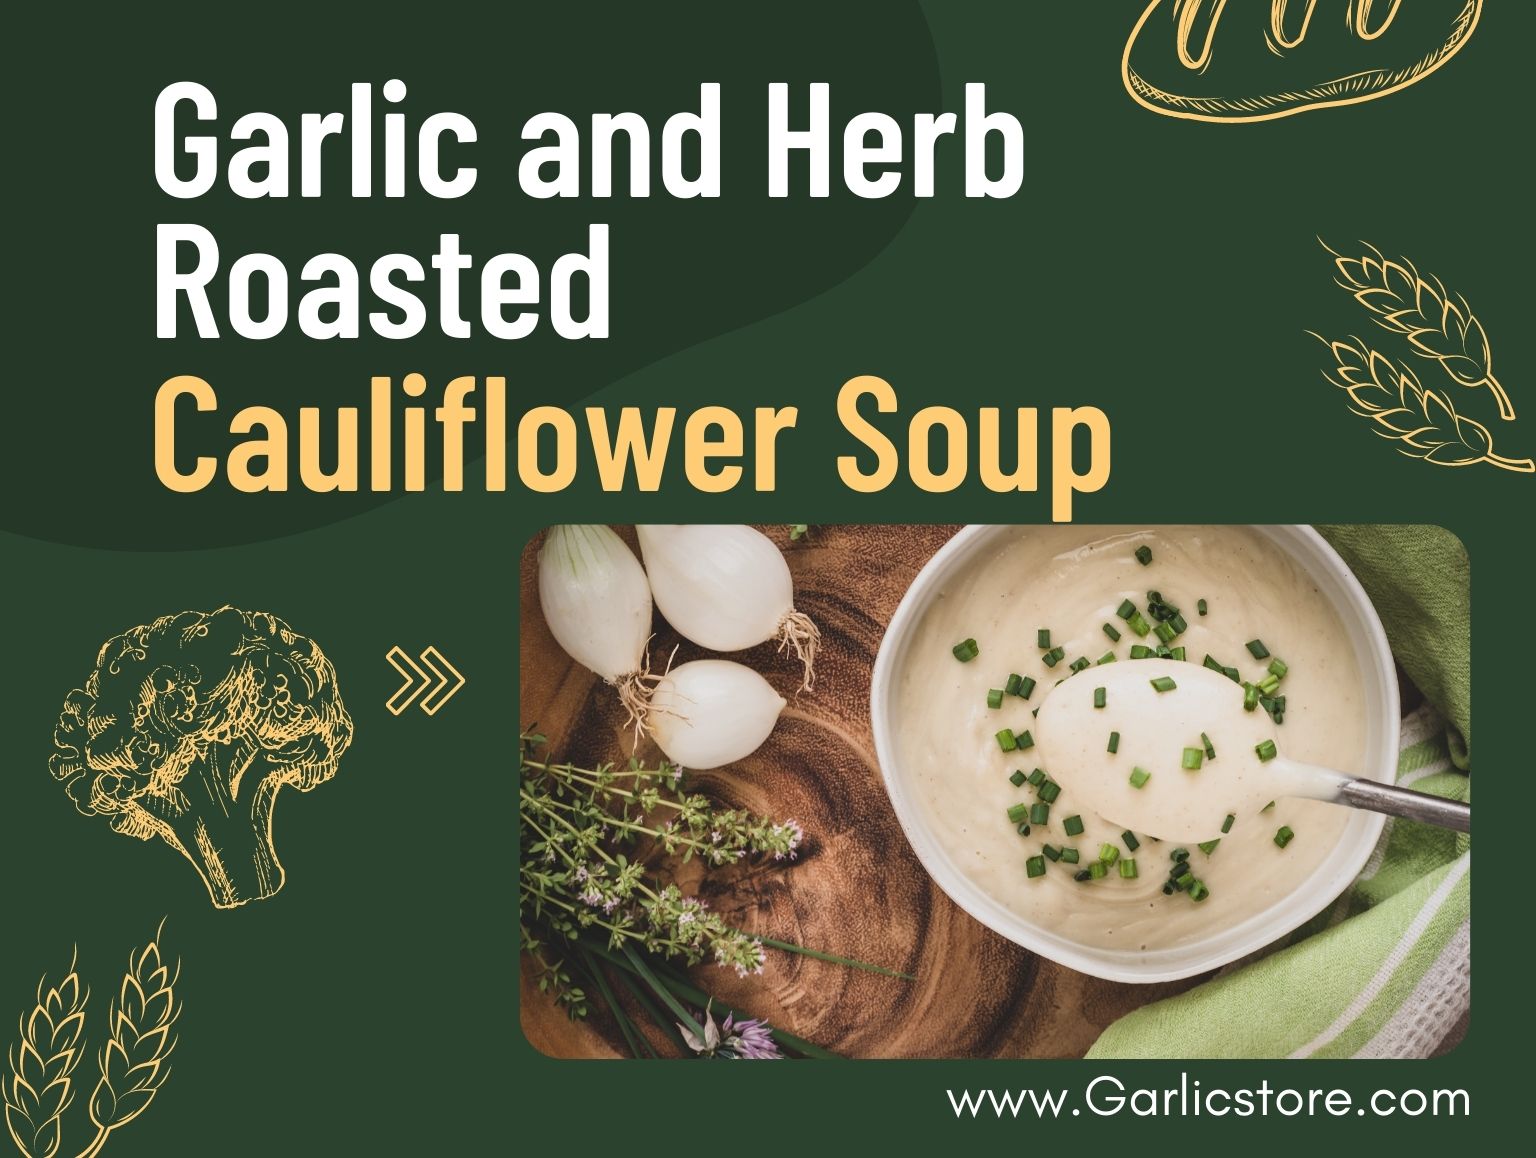 Garlic and Herb Roasted Cauliflower Soup